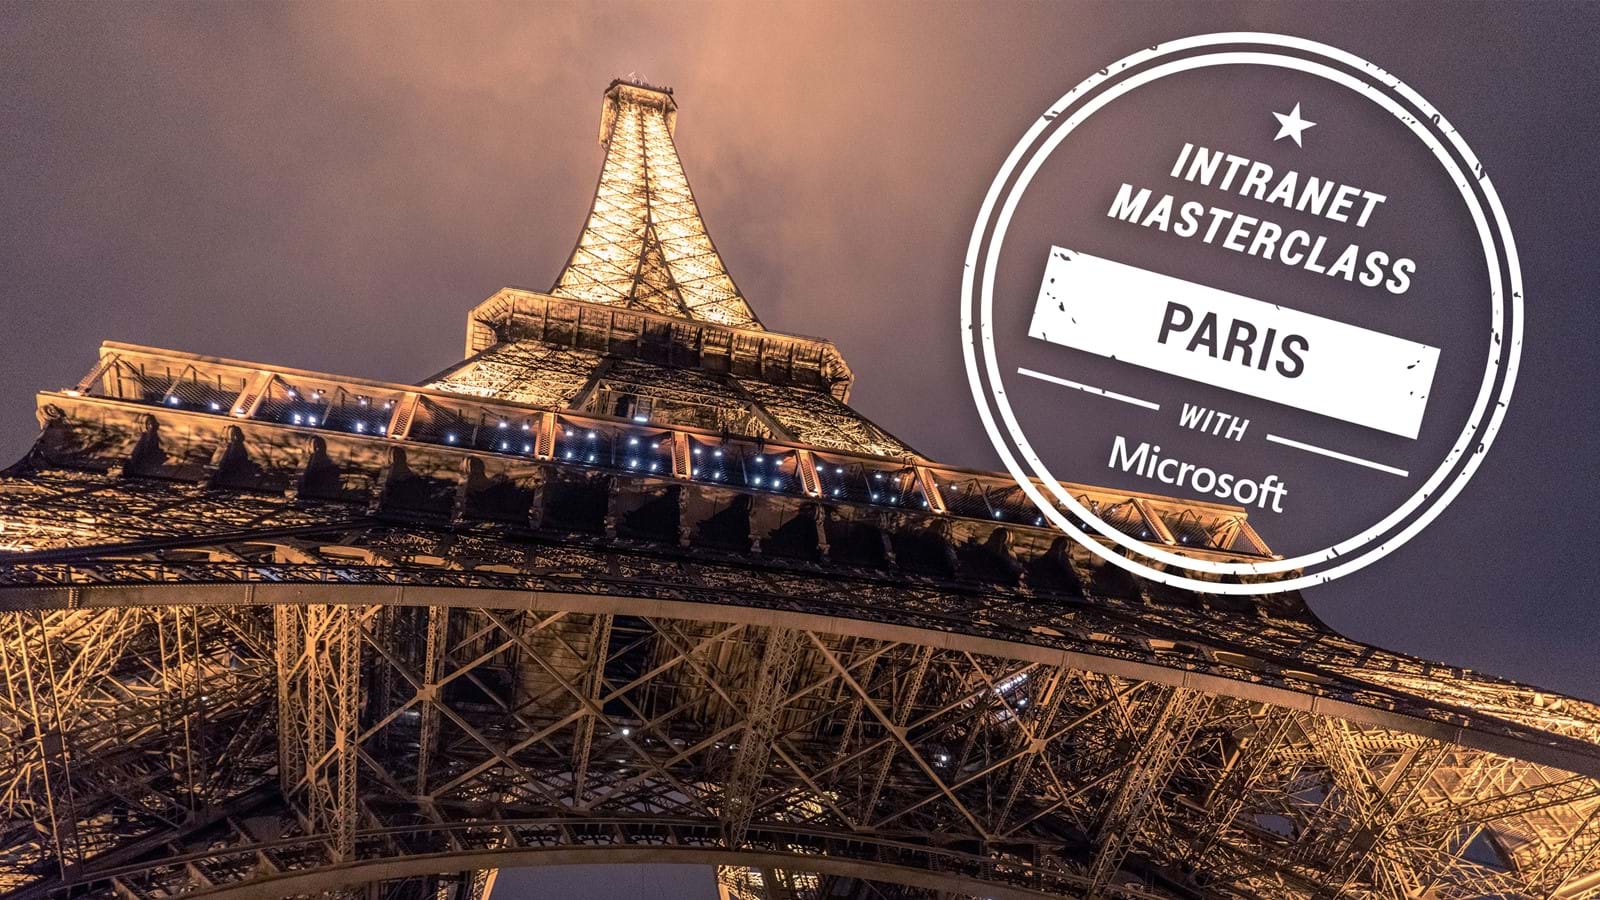 Eiffel Tower image for Paris intranet seminar